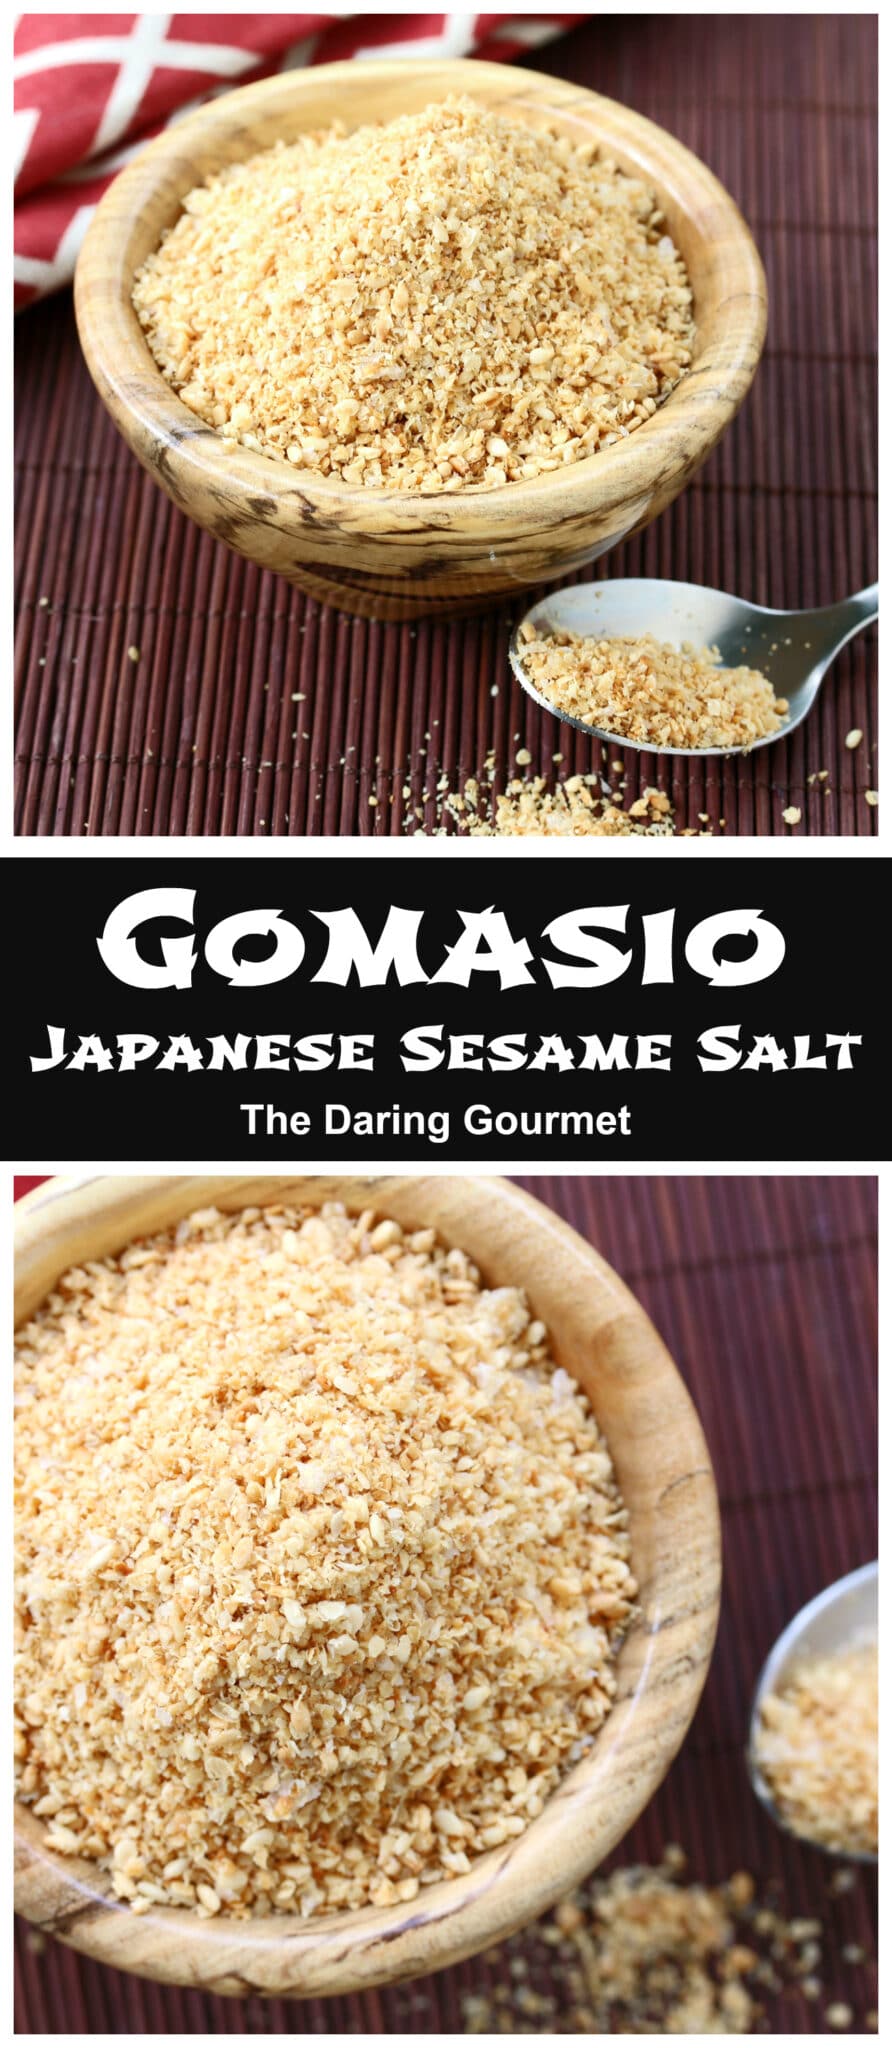 gomasio recipe japanese sesame salt seasoning blend authentic traditional low sodium